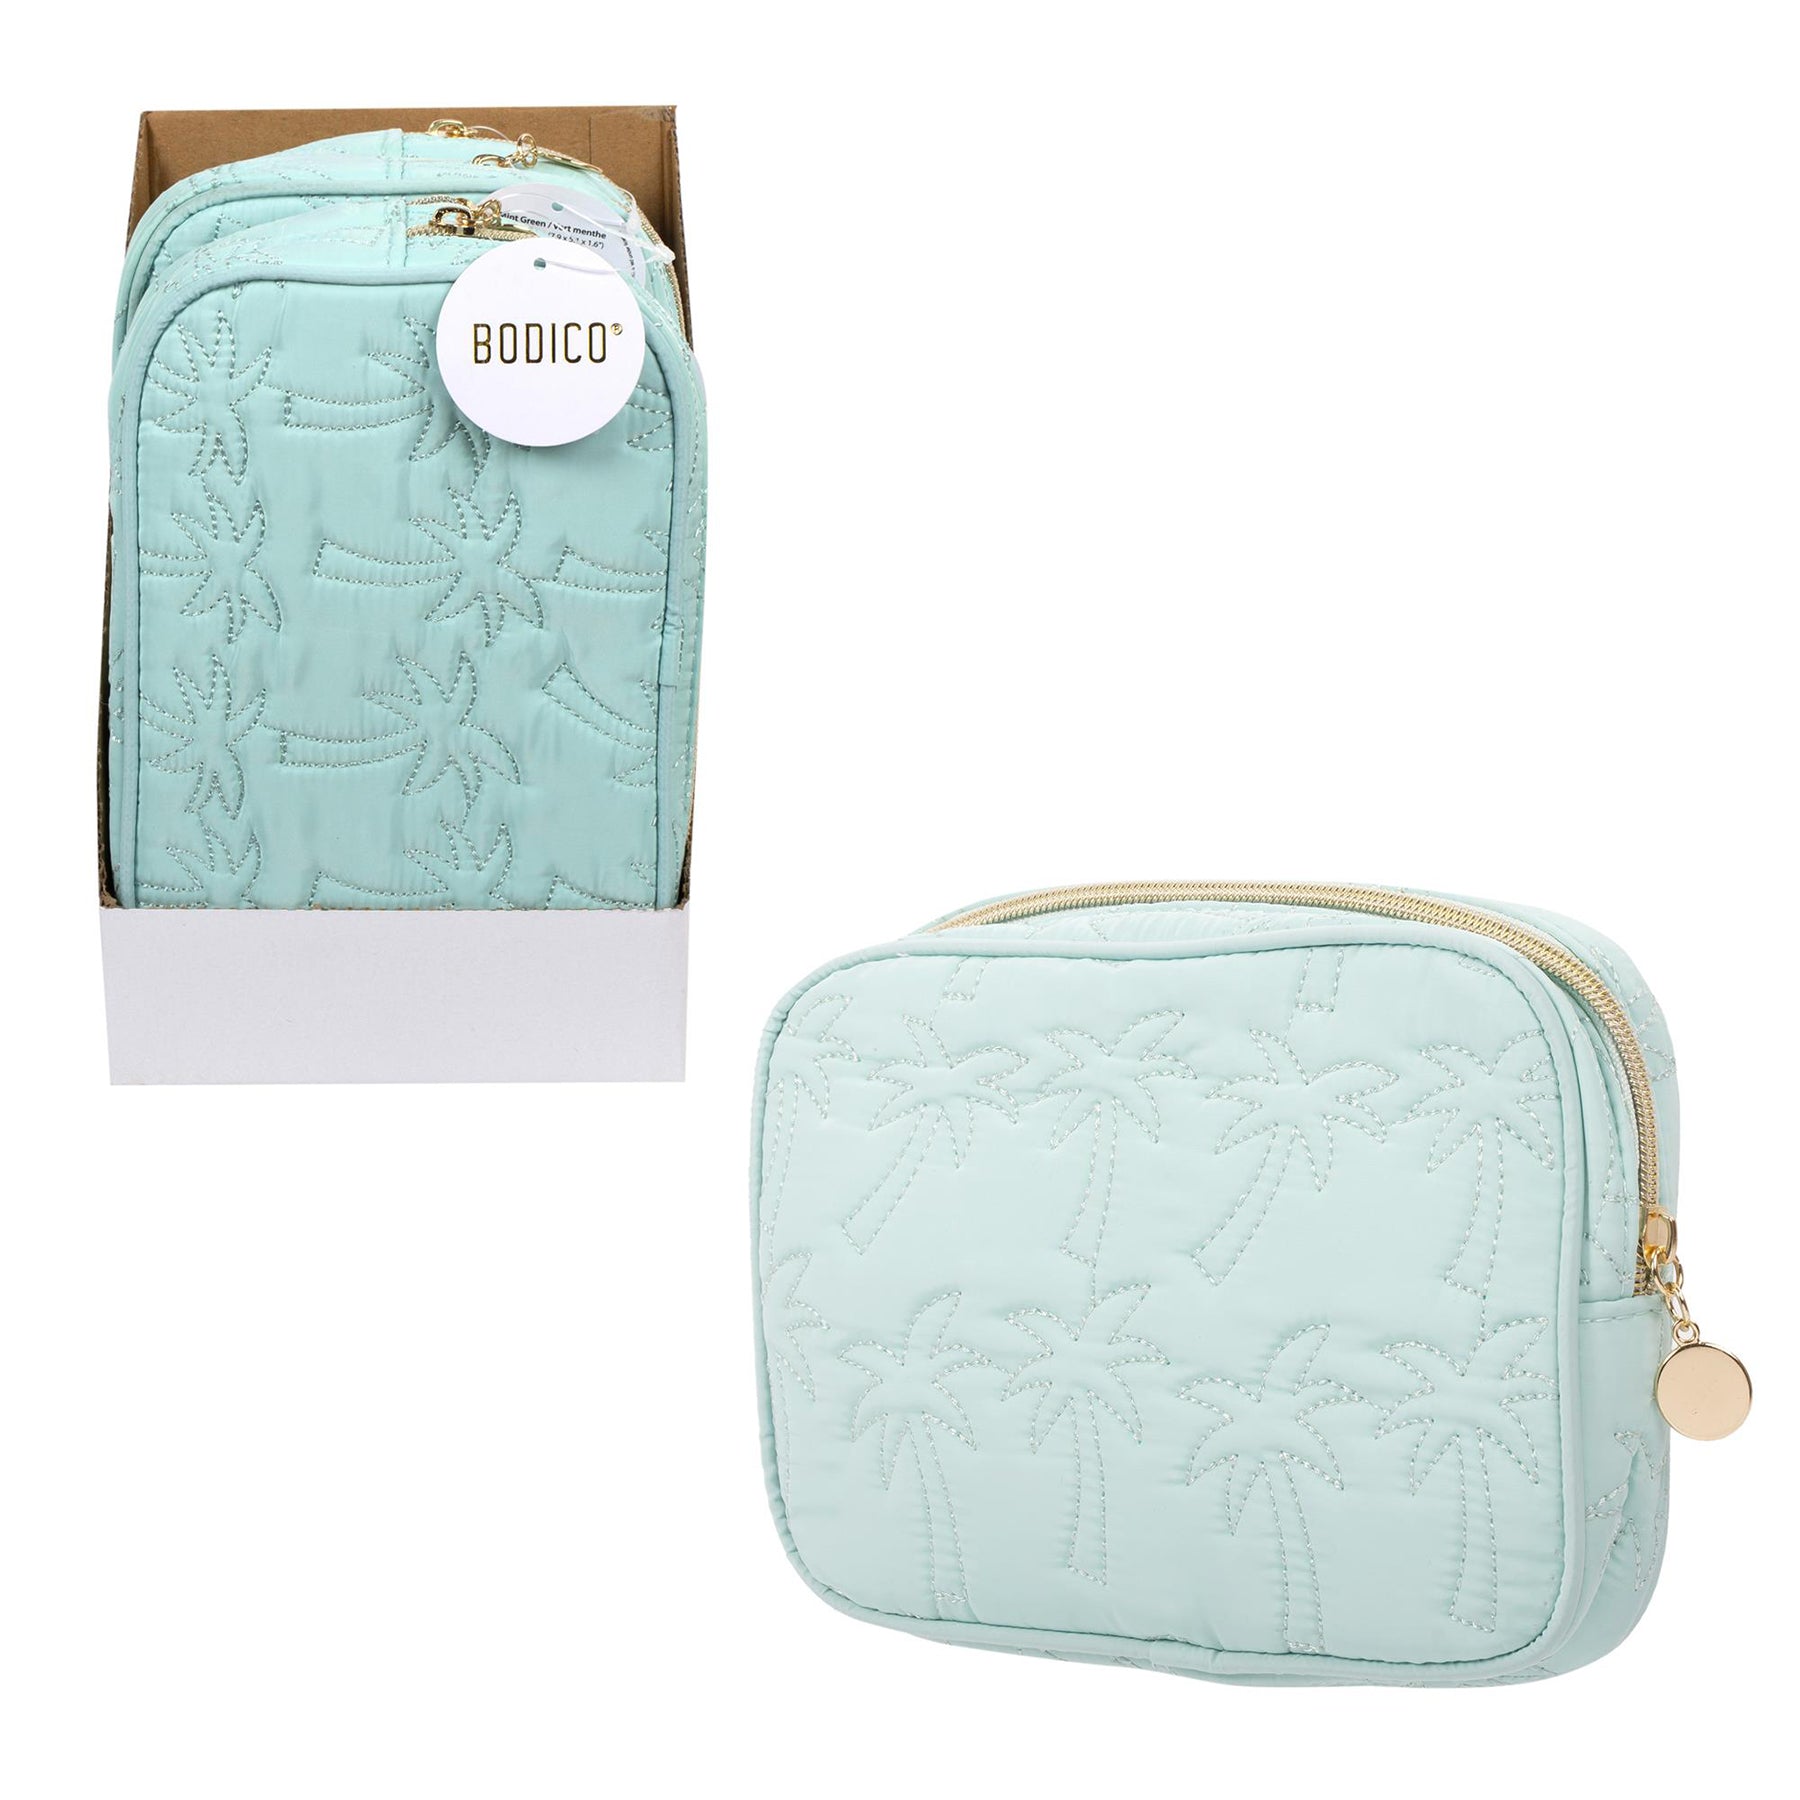 Bodico Cosmetic Bag Mint Green Palm Tree 7.8x1.6x5.1in